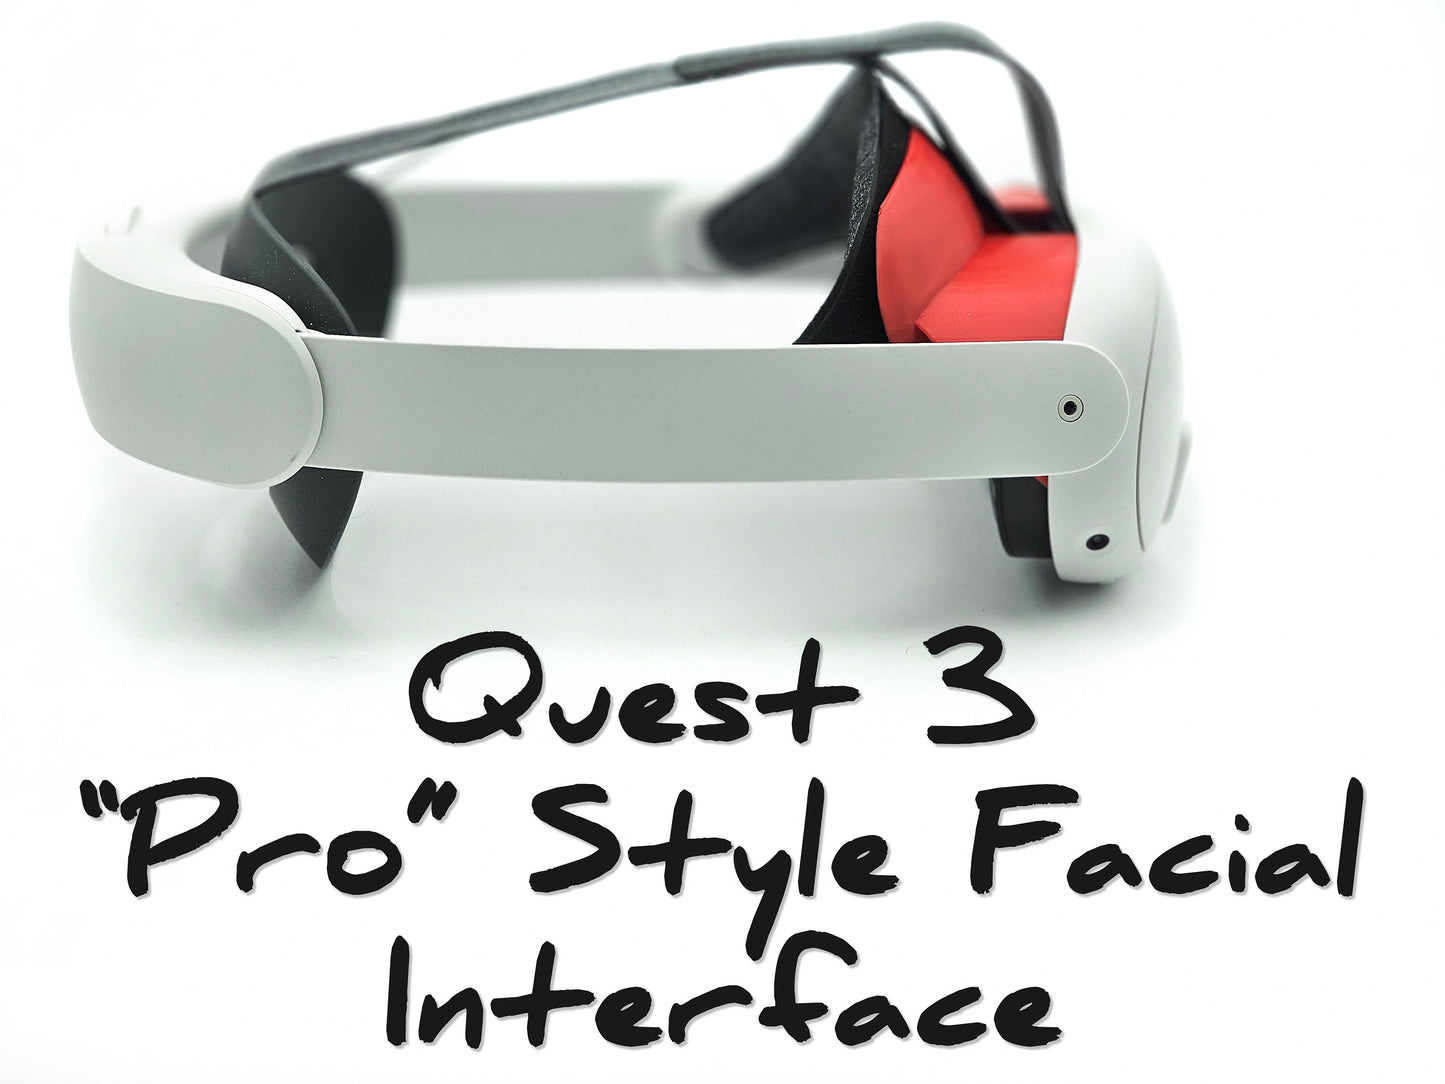 Interfaz facial estilo Meta Quest 3 Pro